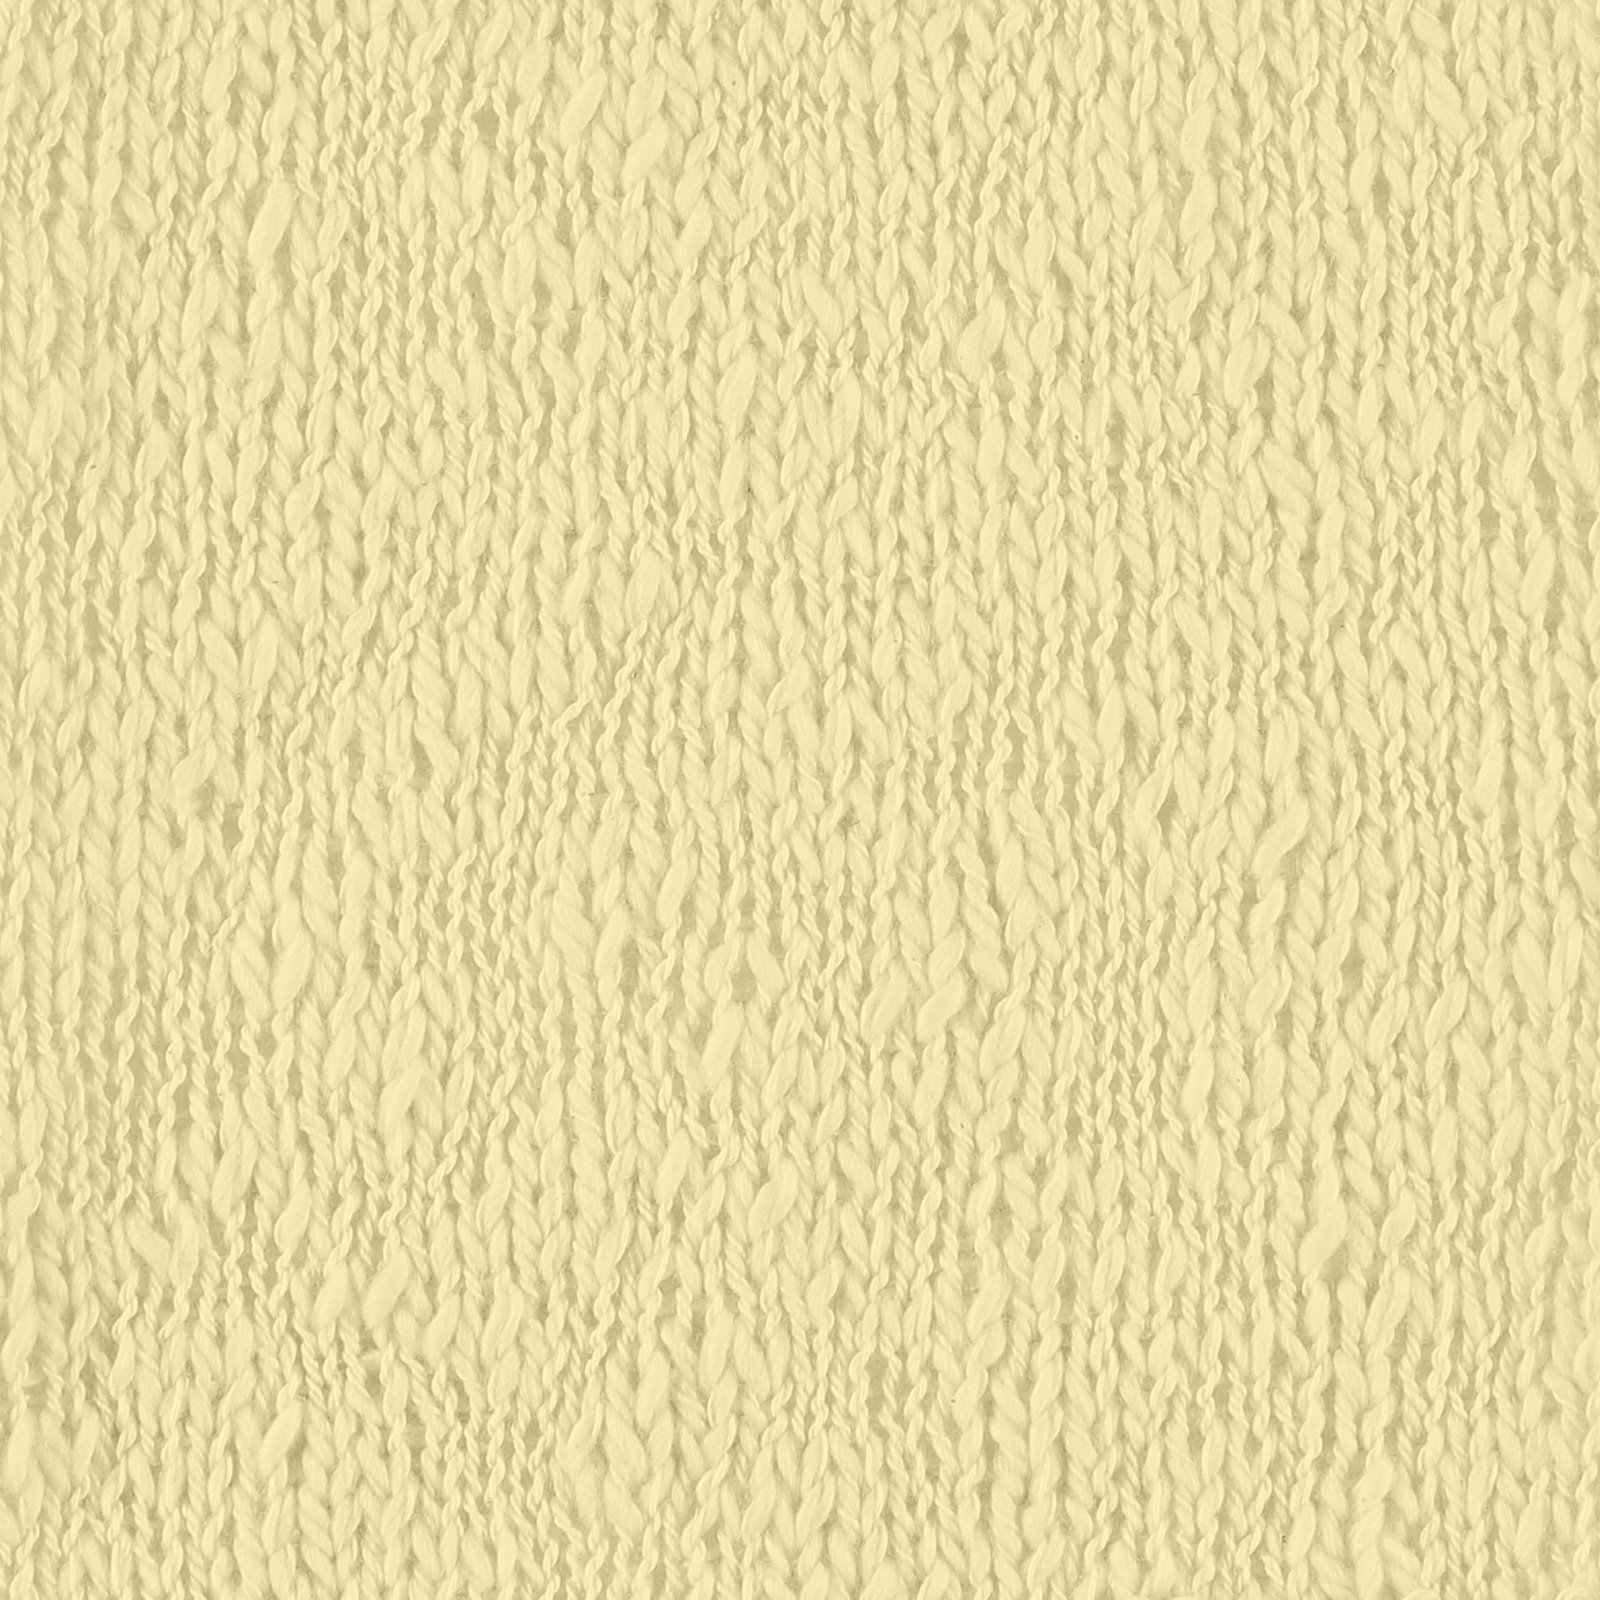 FRAYA, textured cotton yarn "Wavy", light yellow 90000197_sskit